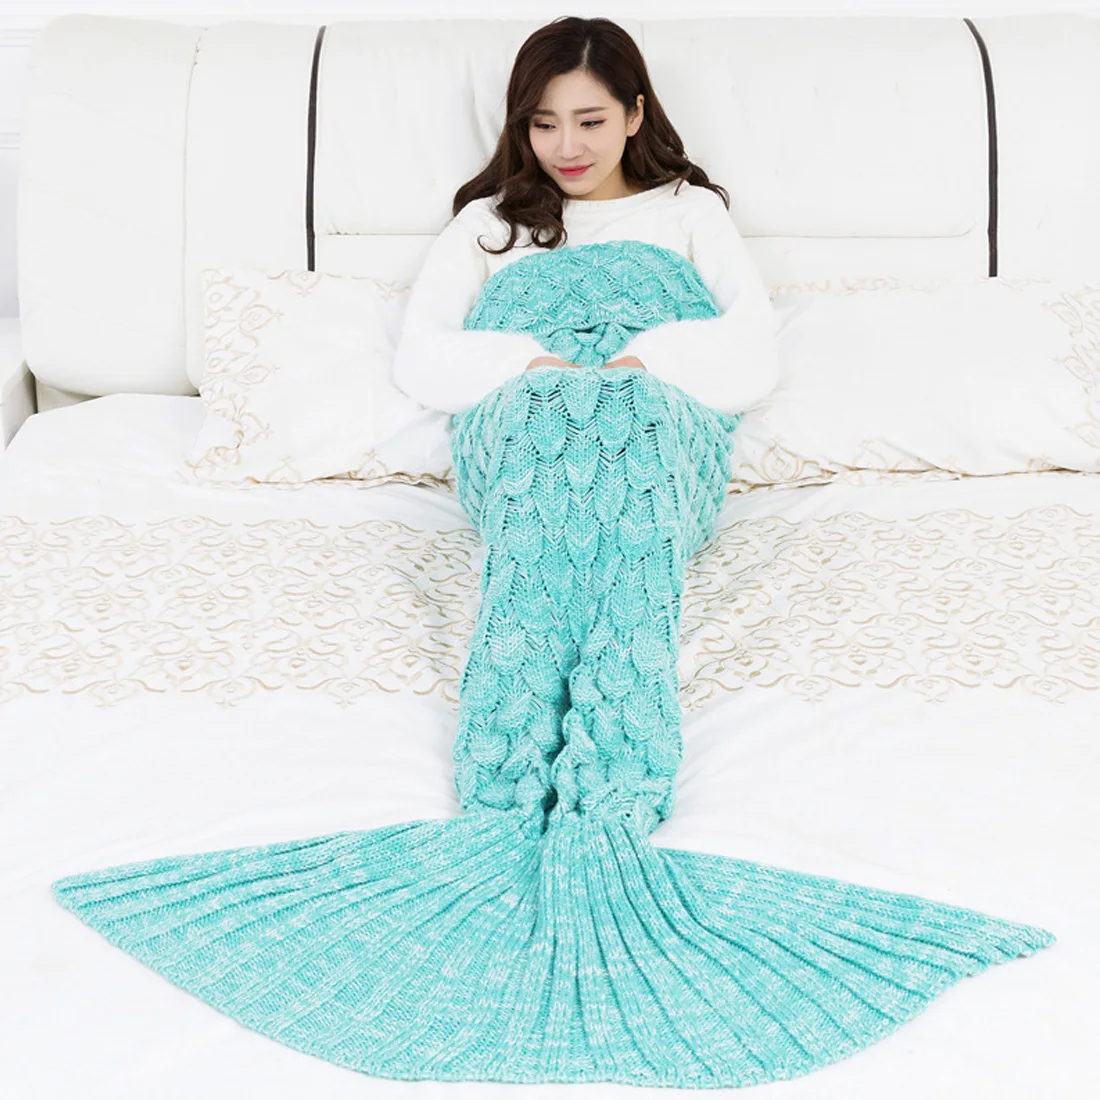 Одеяло с рисунком русалки и чешуи, одеяло с хвостом русалки, теплое покрывало для дивана, кровати, пушистое покрывало, вязаное одеяло русалки, 4 размера - Цвет: Green